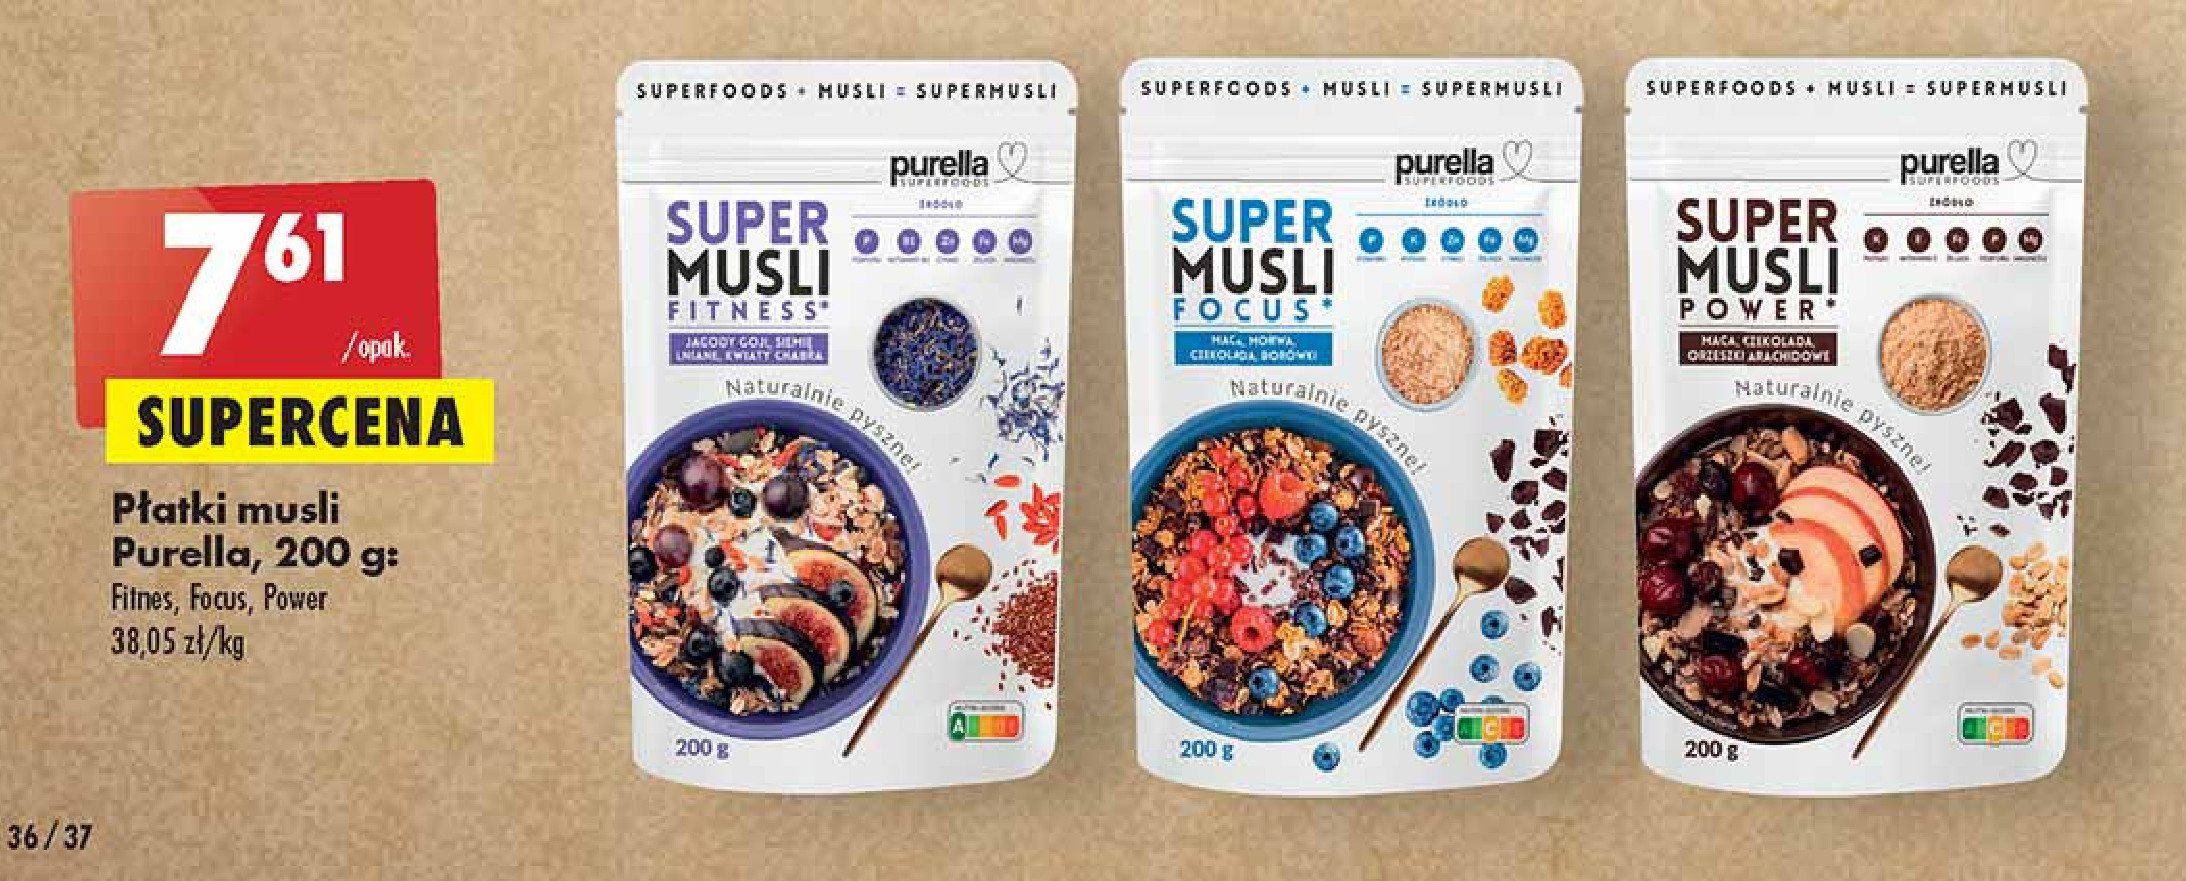 Musli focus Purella super musli Purella food promocja